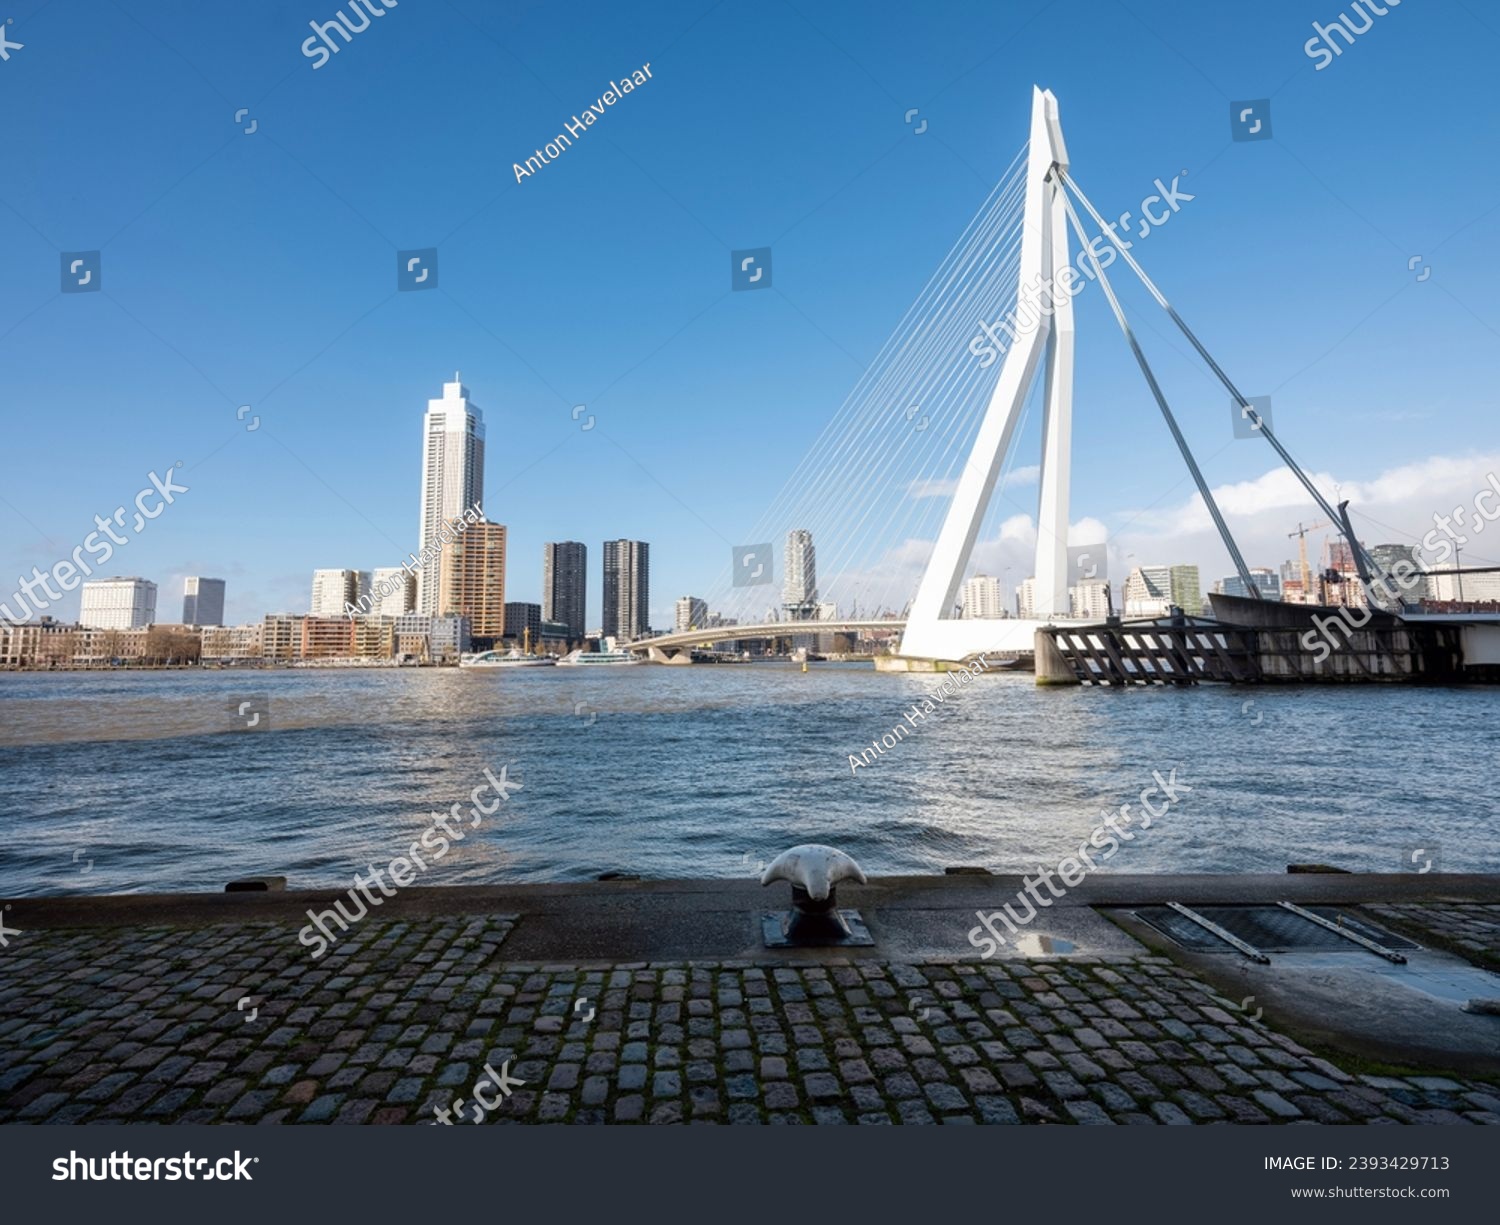 nieuwe maas river and erasmus bridge seen from waterfront of kop van zuid in dutch city of rotterdam on sunny day with blue sky #2393429713